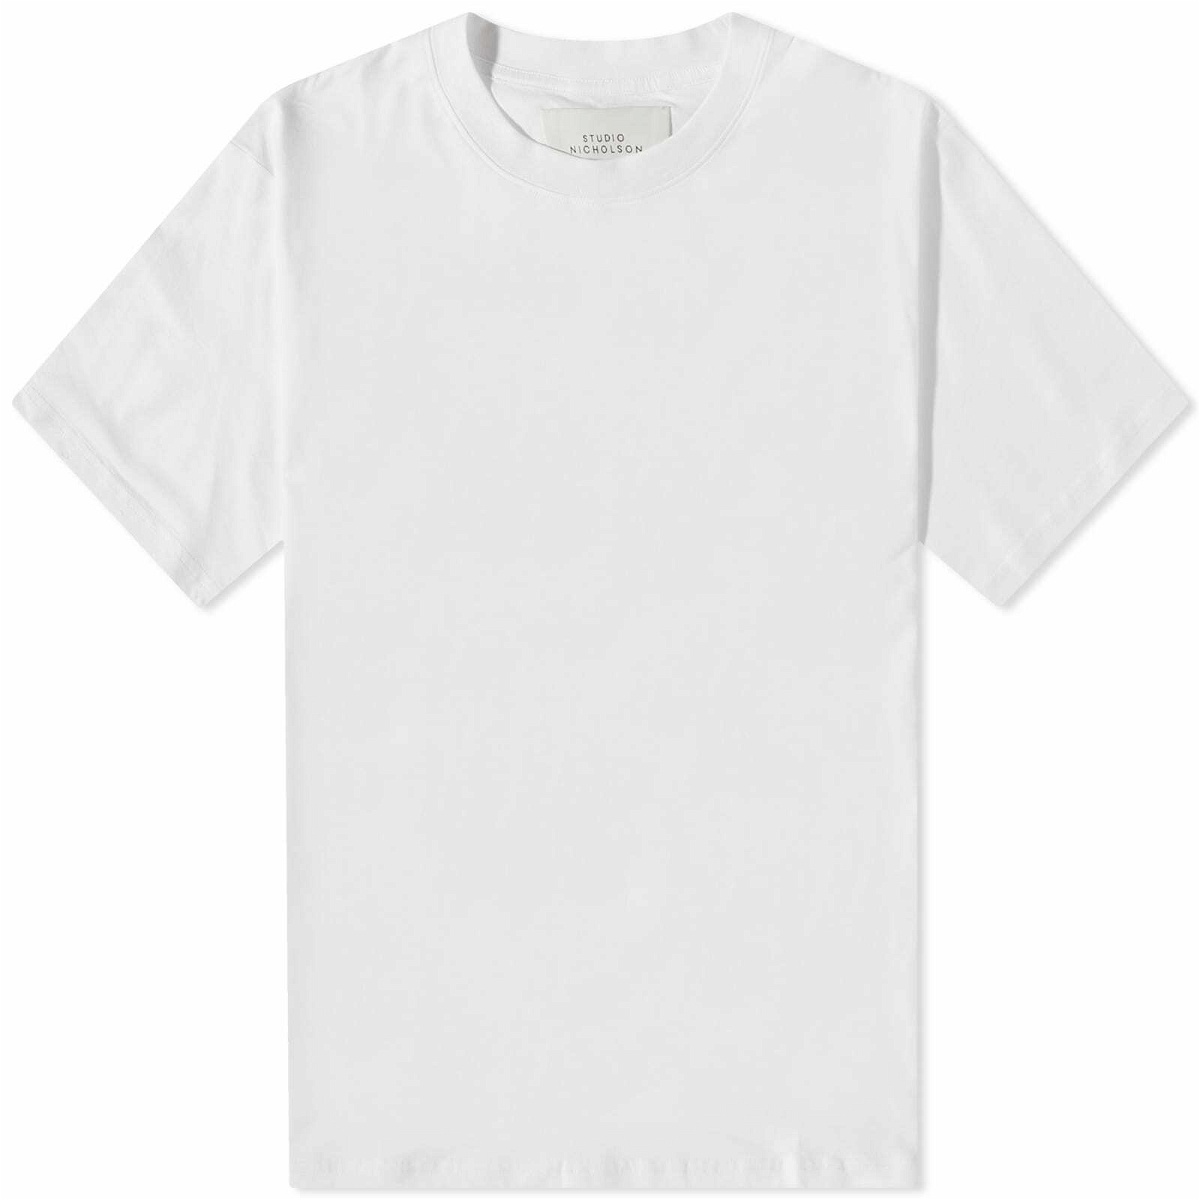 Photo: Studio Nicholson Men's Bric T-Shirt in Optic White